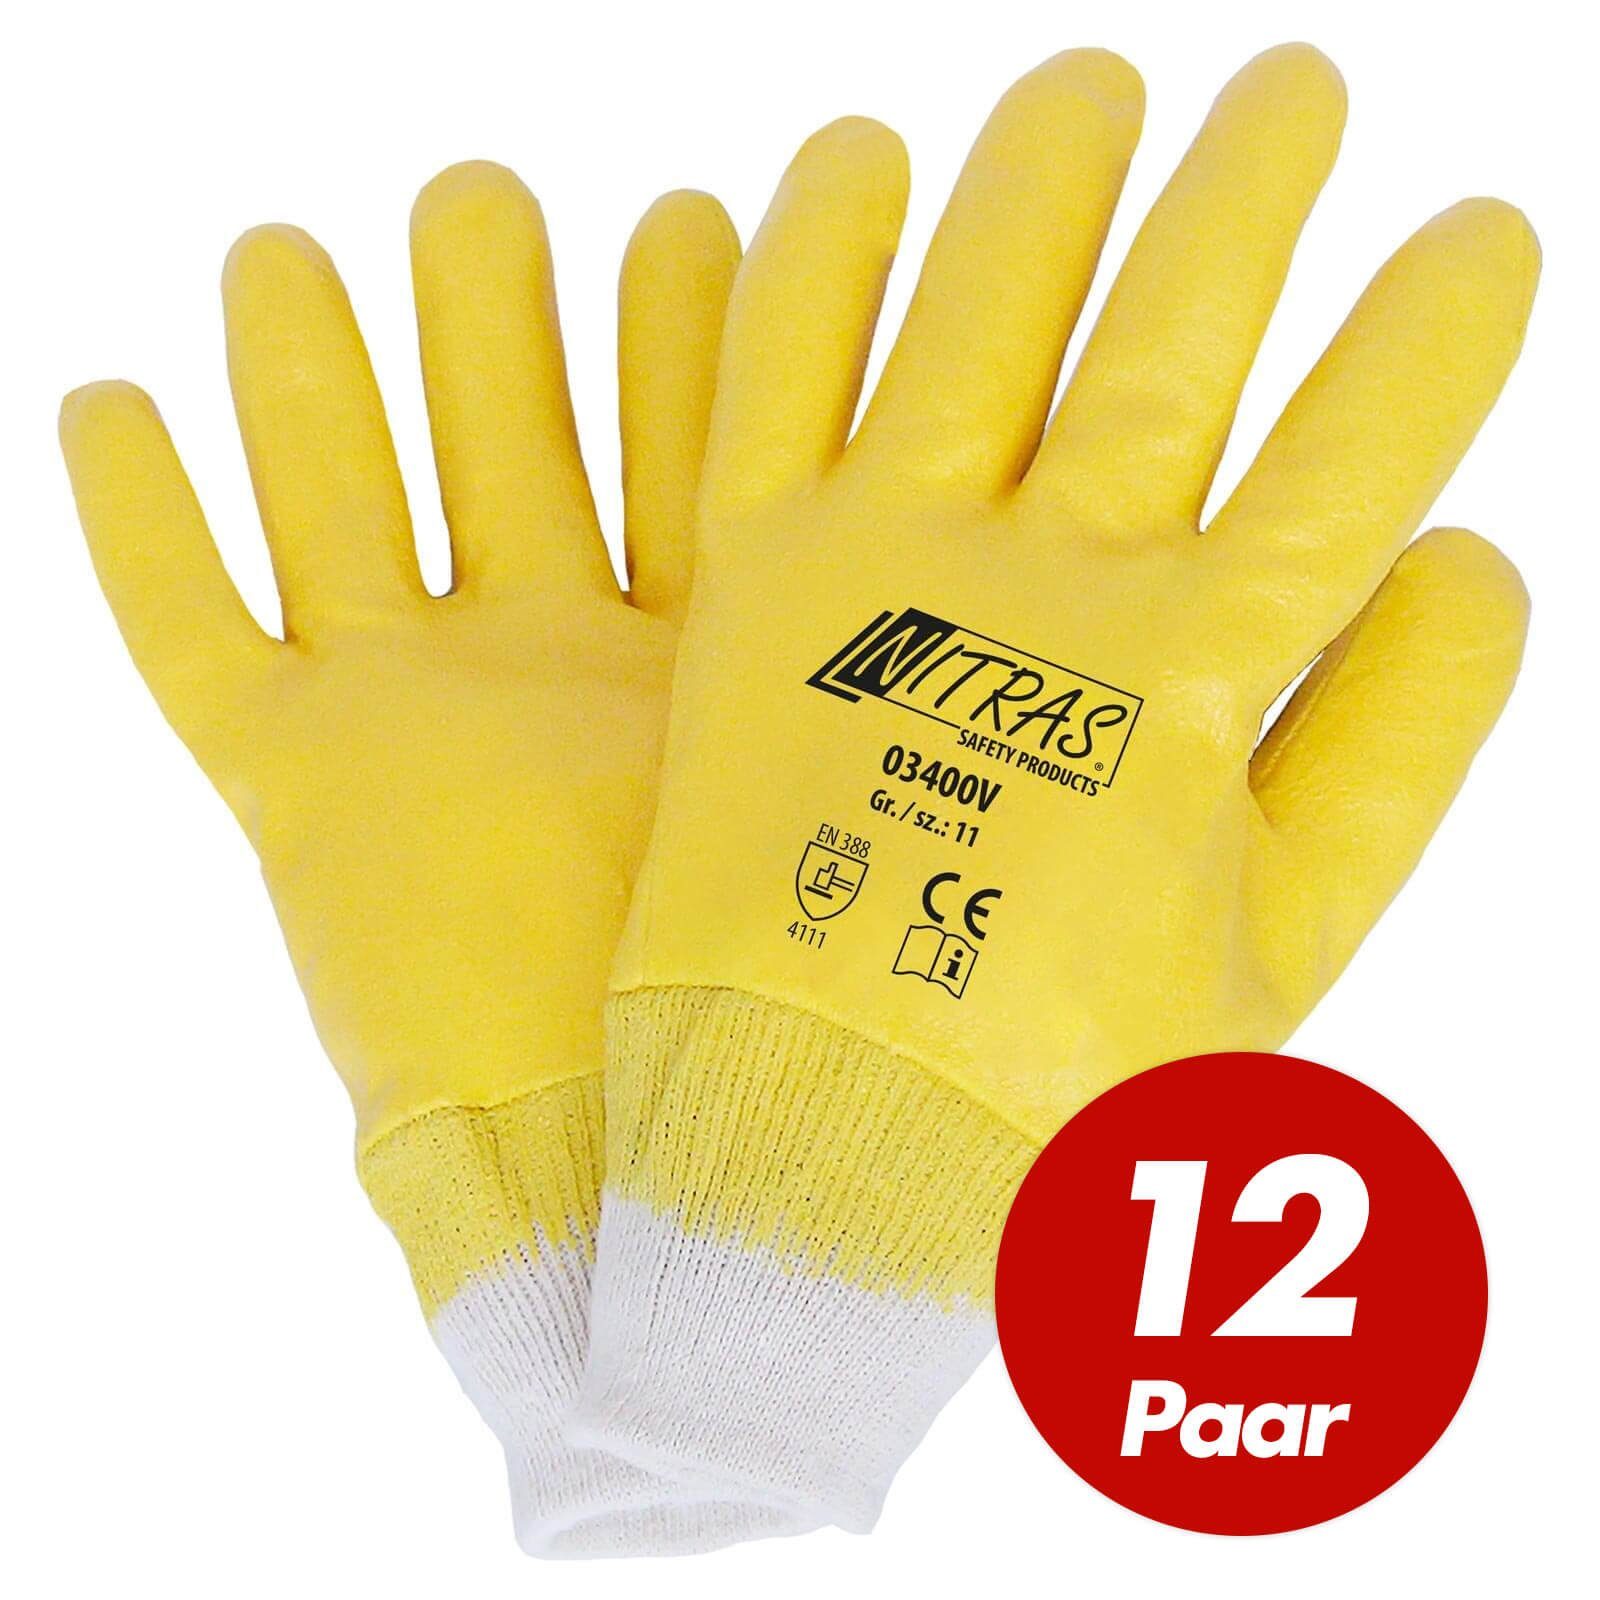 Nitras Nitril-Handschuhe NITRAS 03400V Nitrilhandschuhe, Schutzhandschuhe - VPE 12 Paar (Spar-Set) | Handschuhe